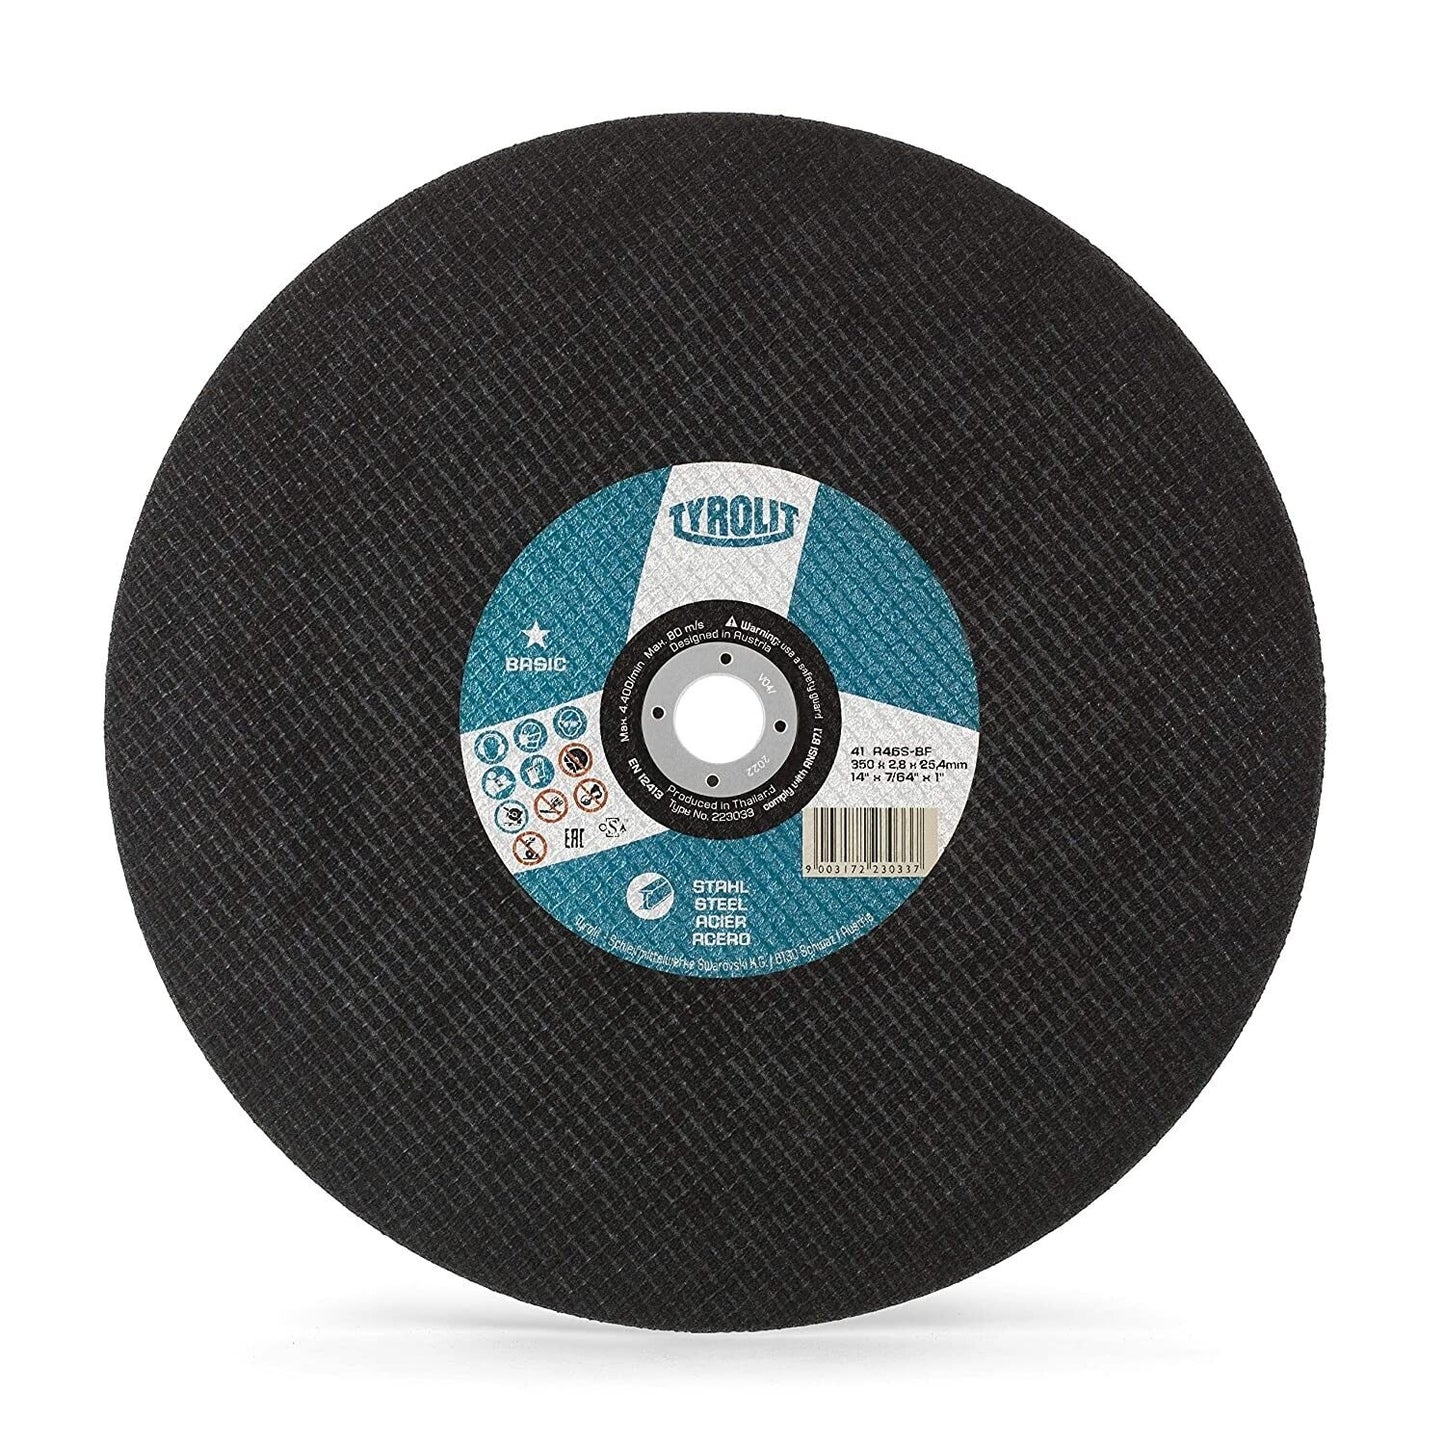 TYROLIT 223033 Cutting Disc for Steel - 350mm x 2.8mm x 25.4mm